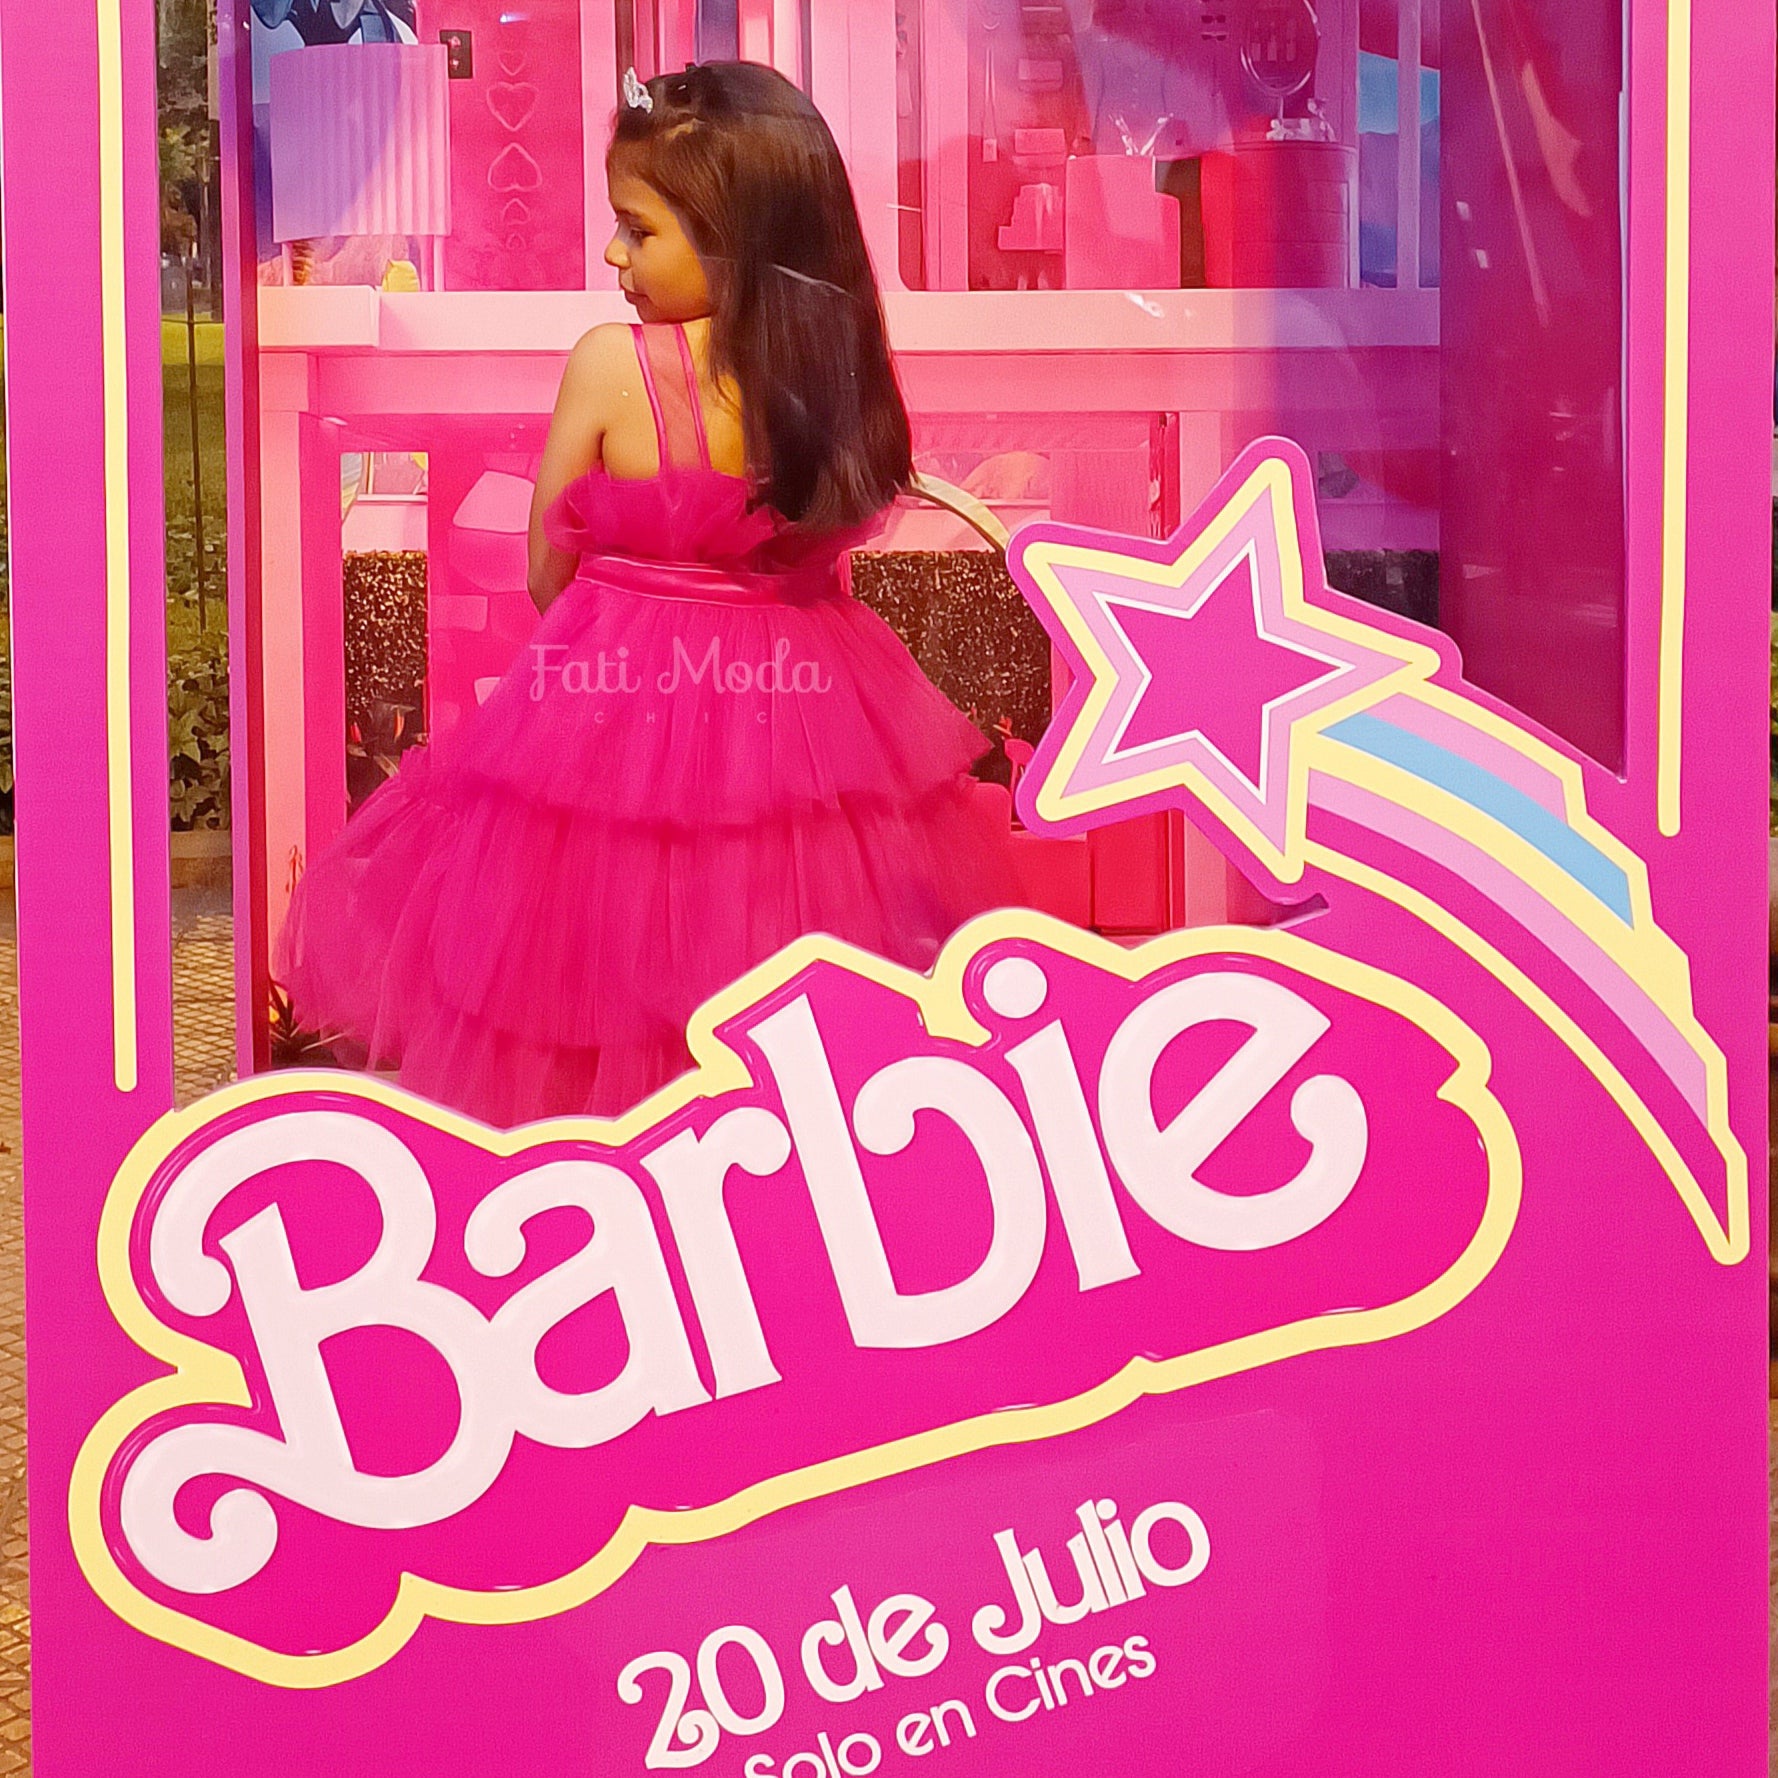 Vestido Barbie para niña